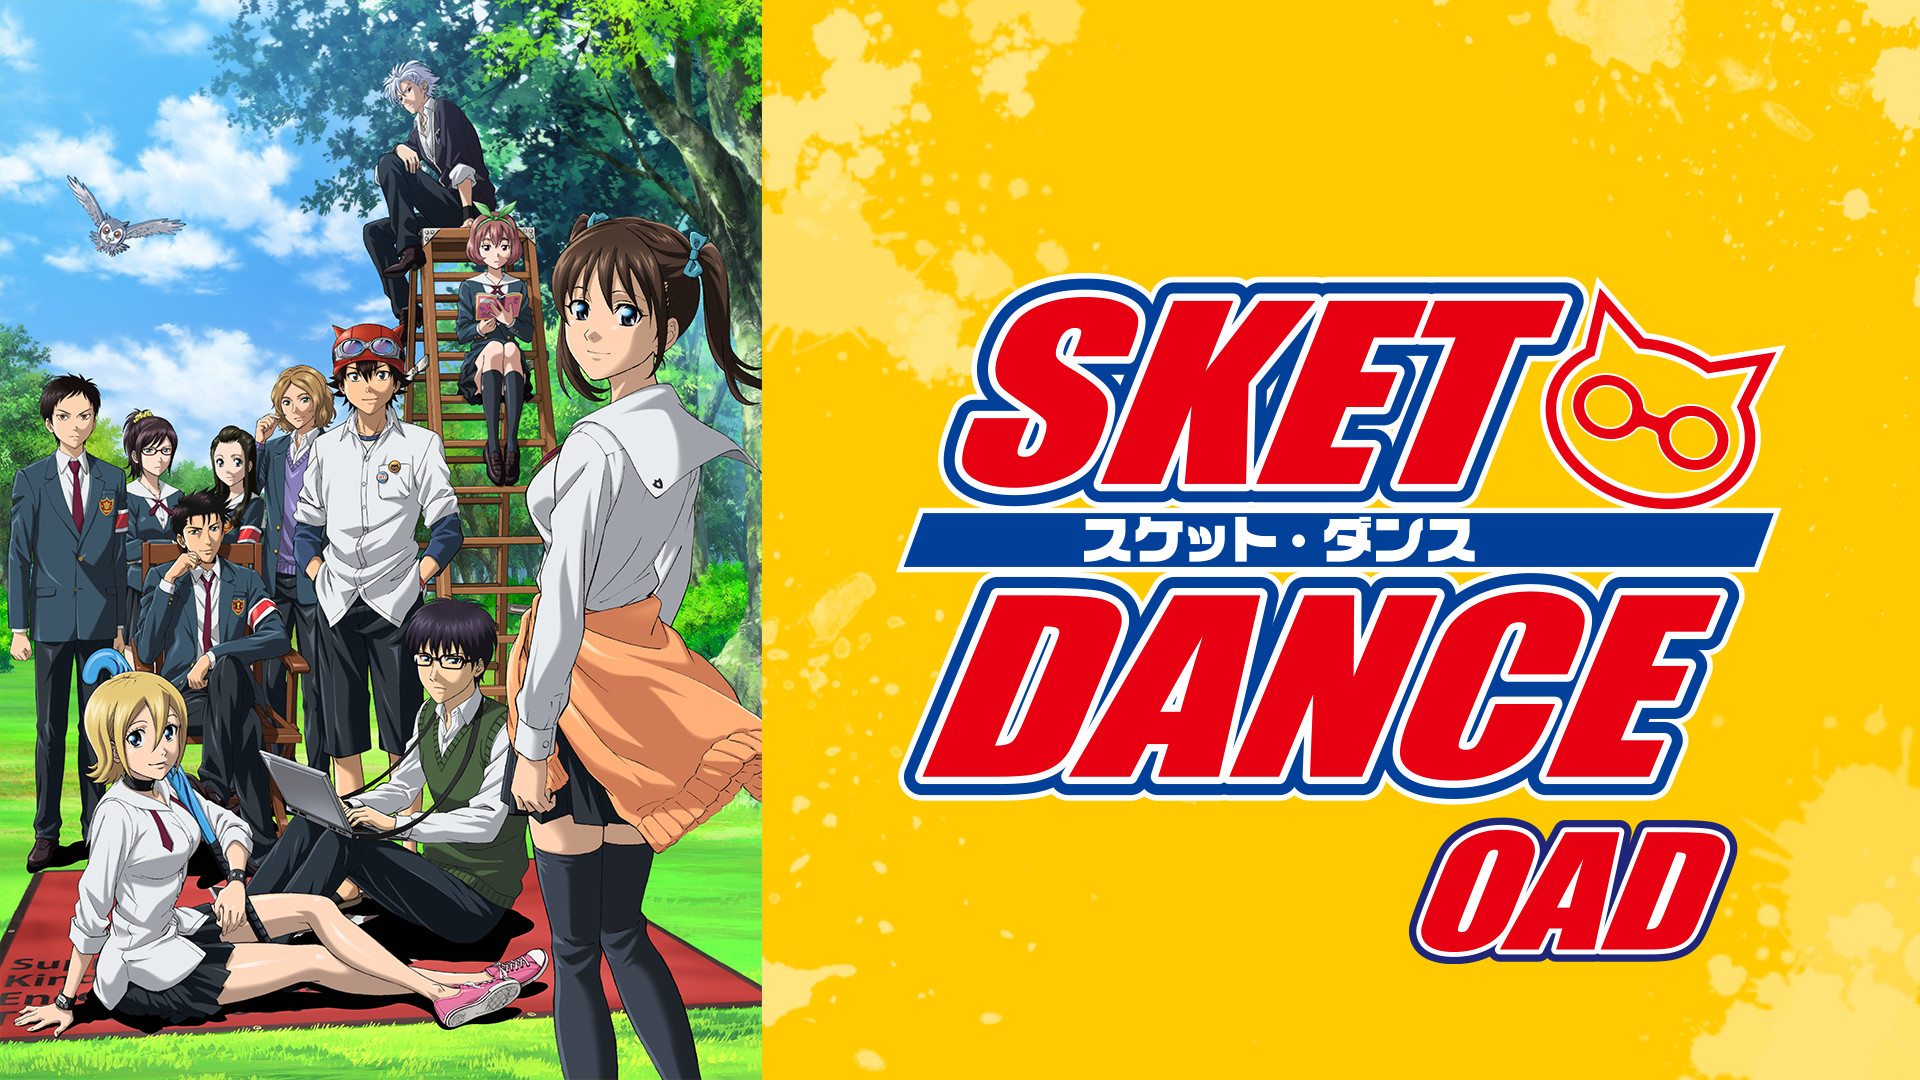 SKET DANCE(OAD) | アニメ動画見放題 | dアニメストア